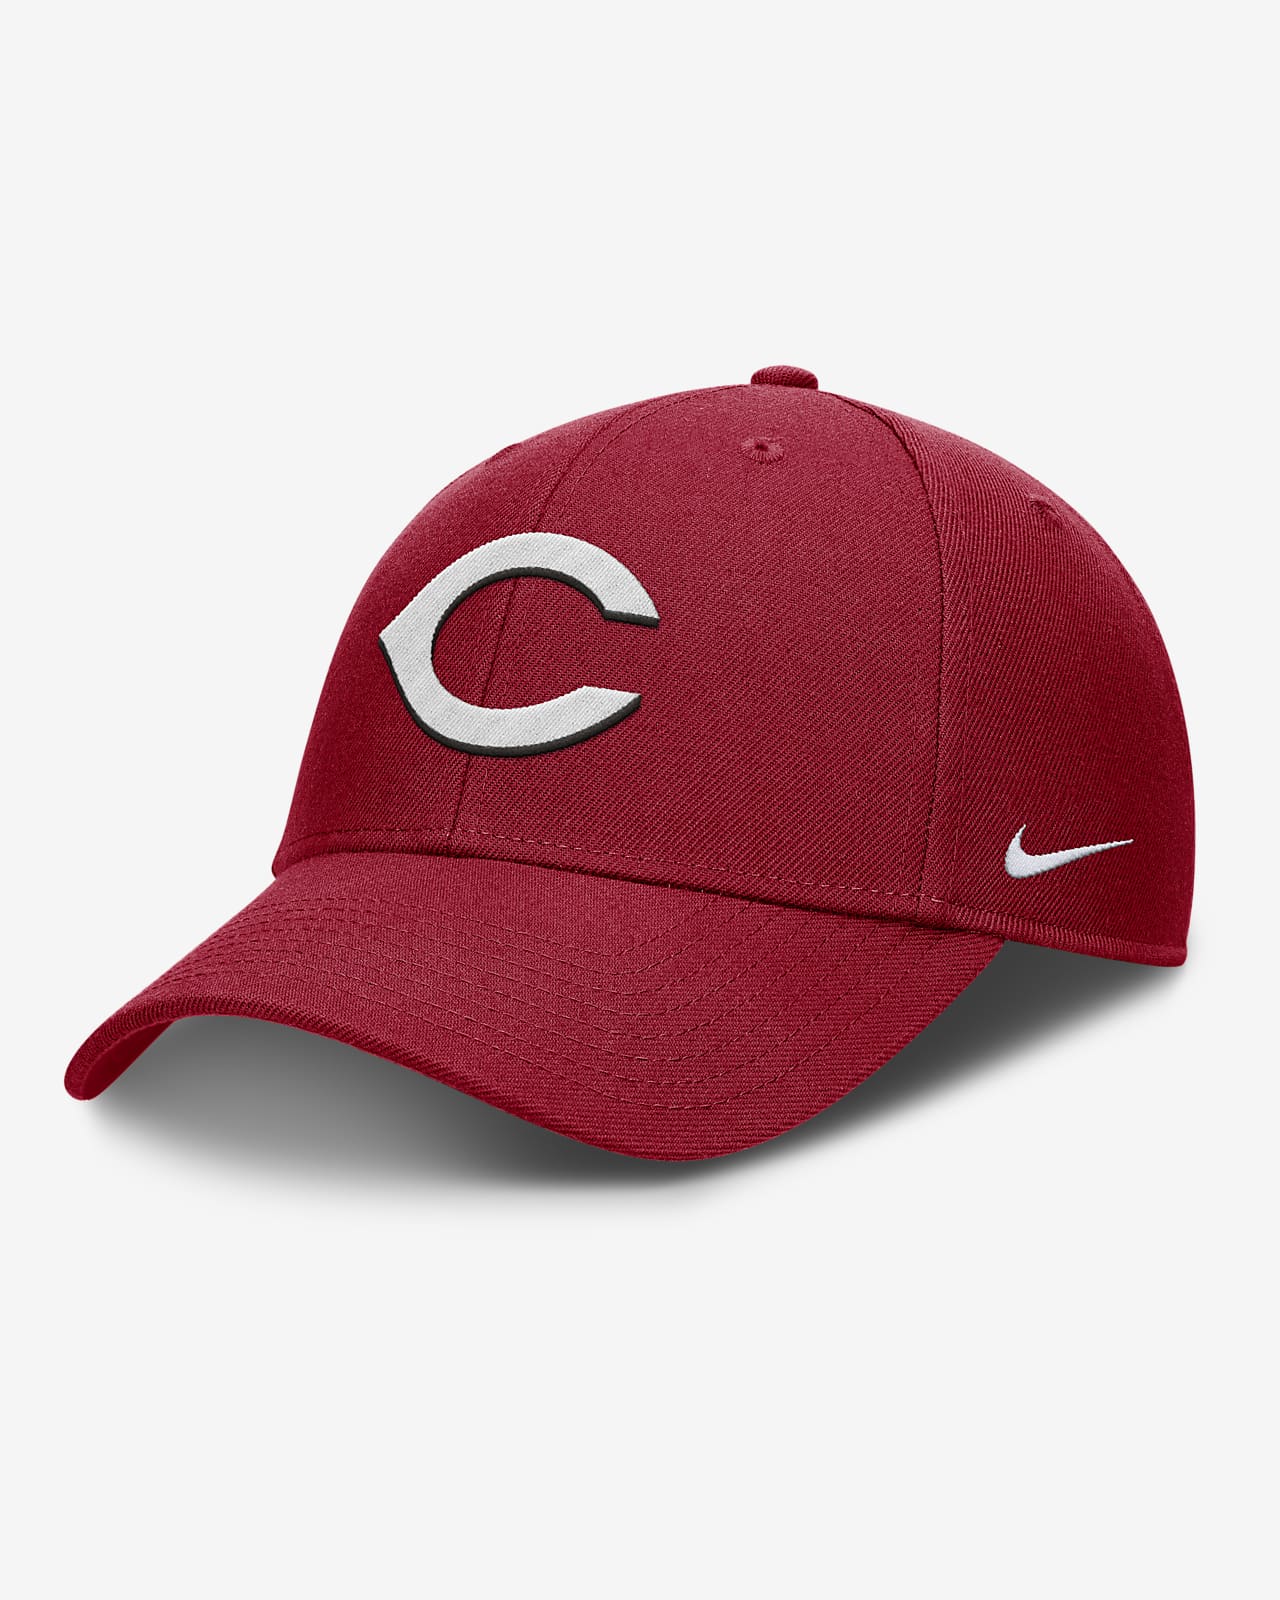 Mens Moisture Wicking Baseball Cap Hats - Accessories